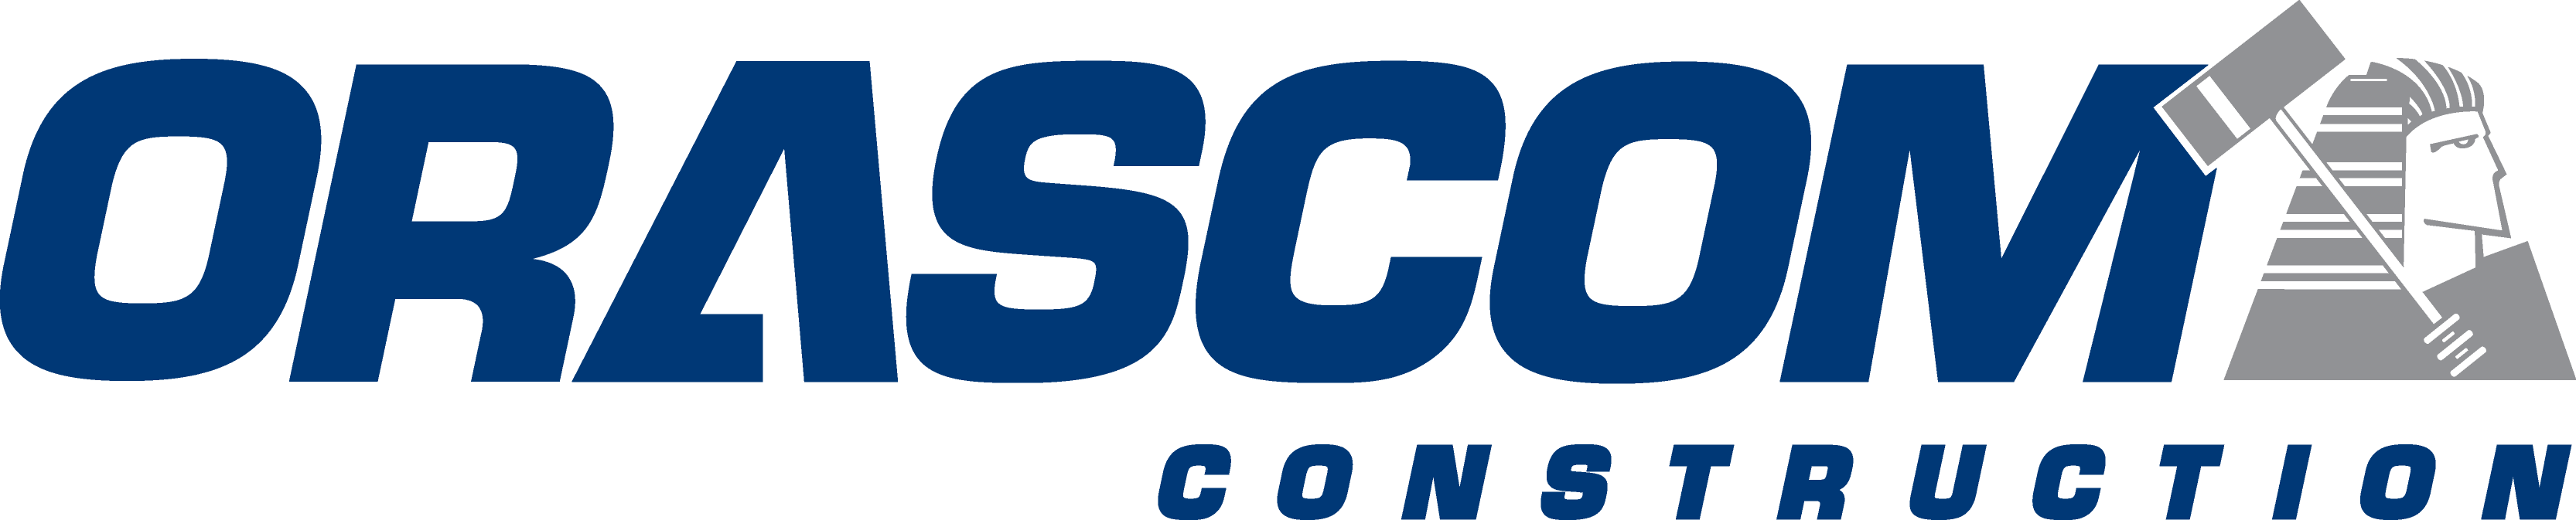 OCfinal Logo